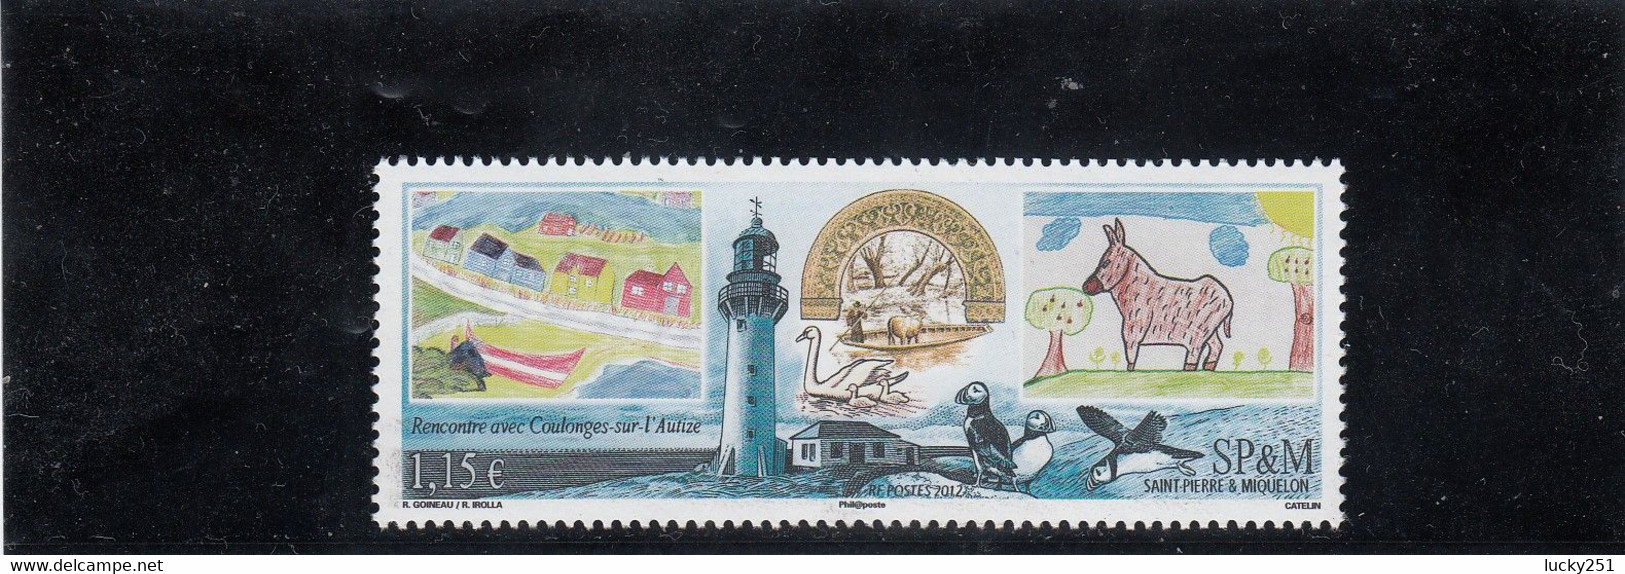 Saint Pierre Et Miquelon - Neuf** - Phares, Lighthouse, Leuchtturm. - Phares